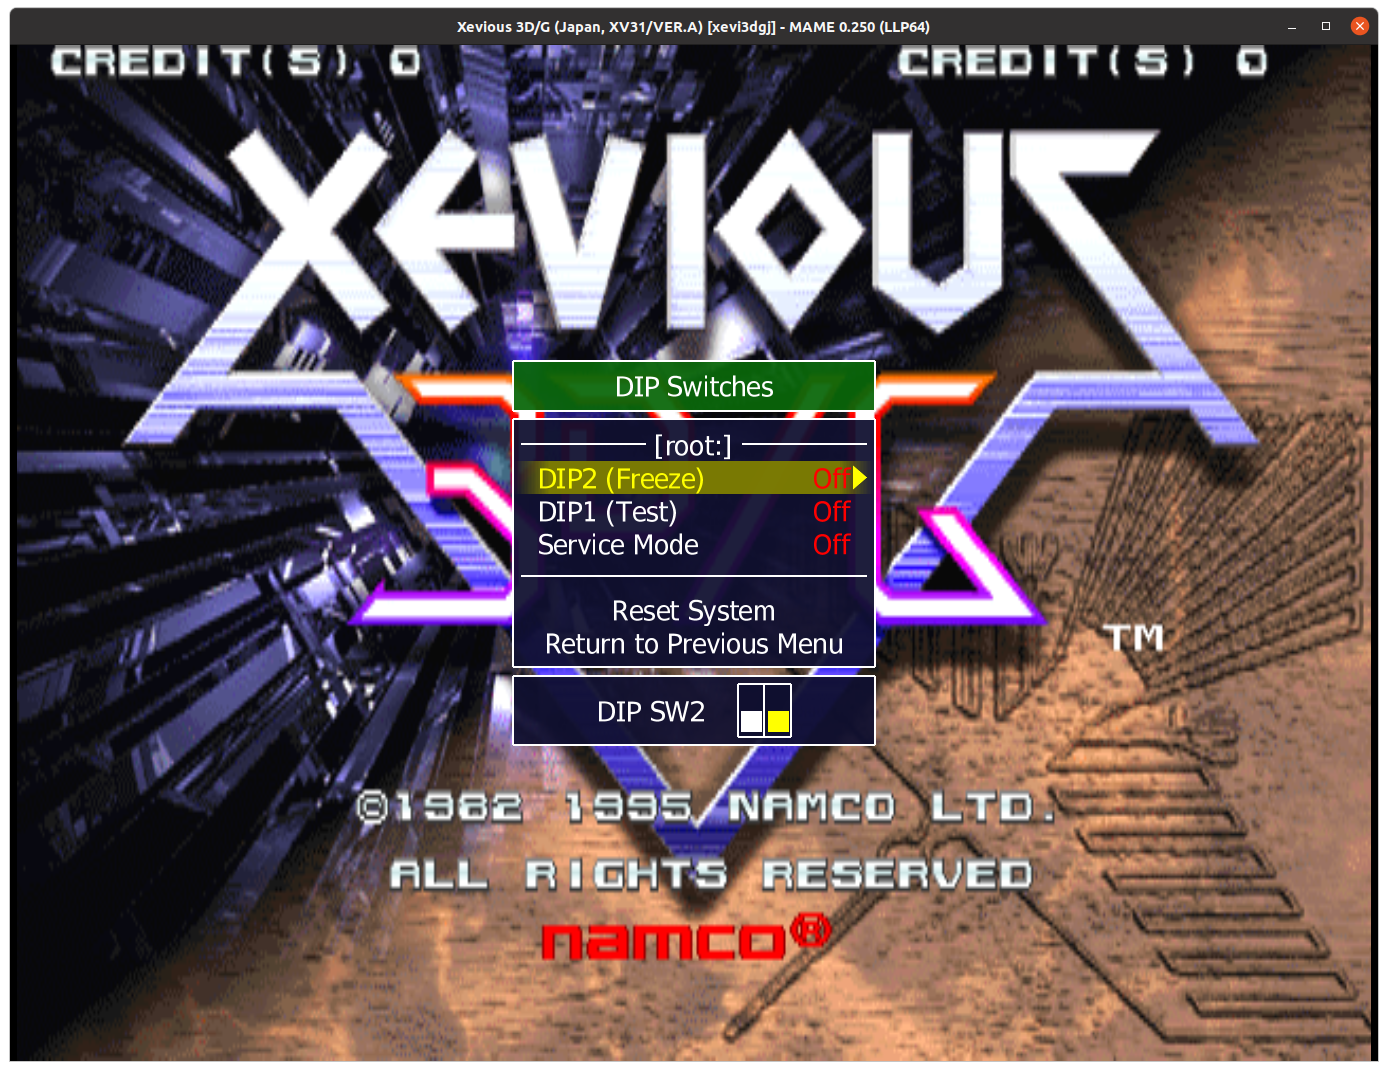 Xevious 3D/G (Japan, XV31/VER.A) (xevi3dgj) default settings, MAME 0.250